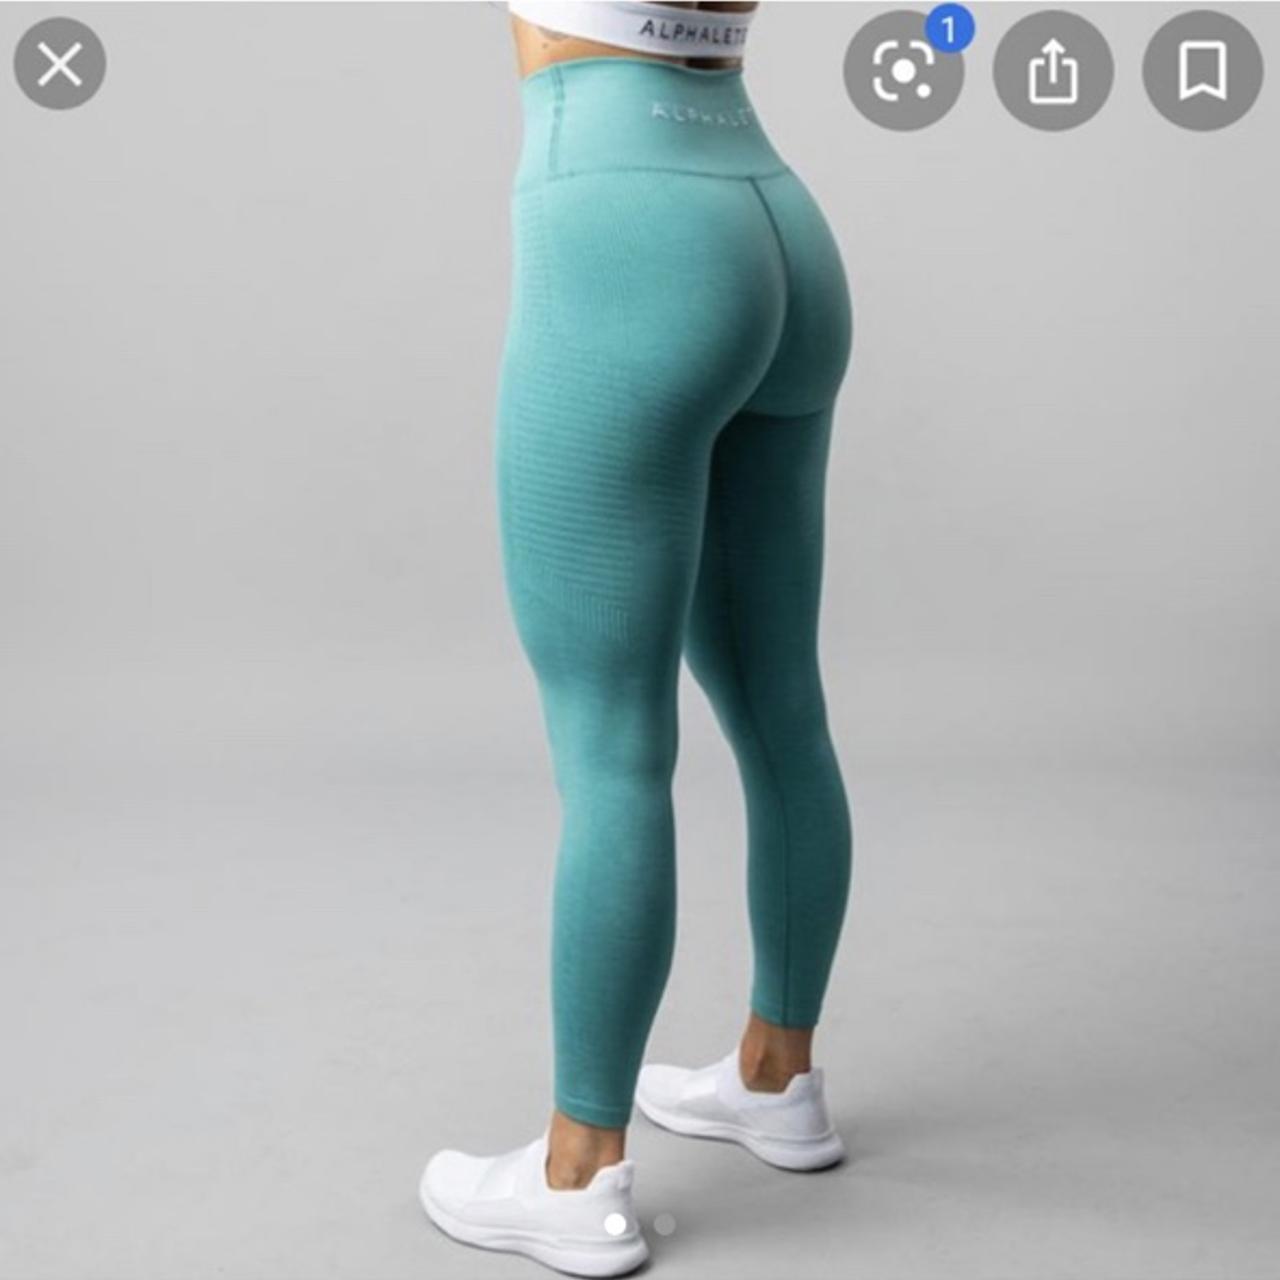 Alphalete, Pants & Jumpsuits, Nwt Packaging Alphalete Halo Leggings Urban  Chic Small